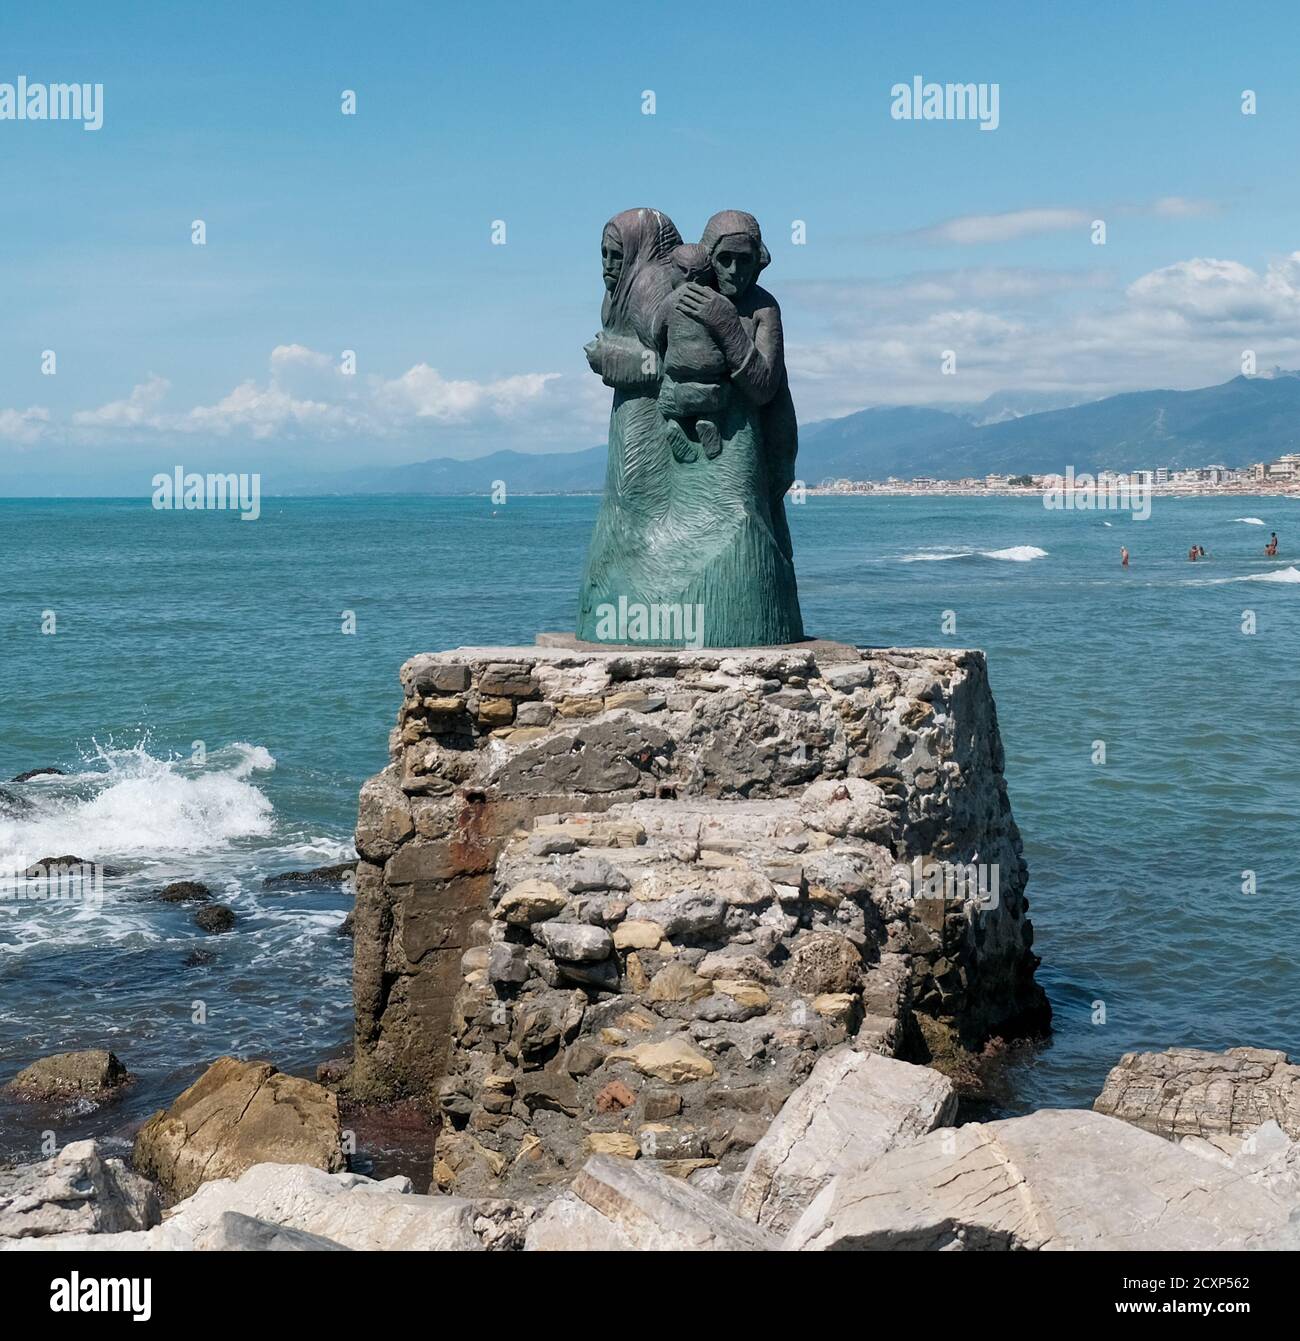 viareggio view of the statue on the pier. High quality photo Stock Photo